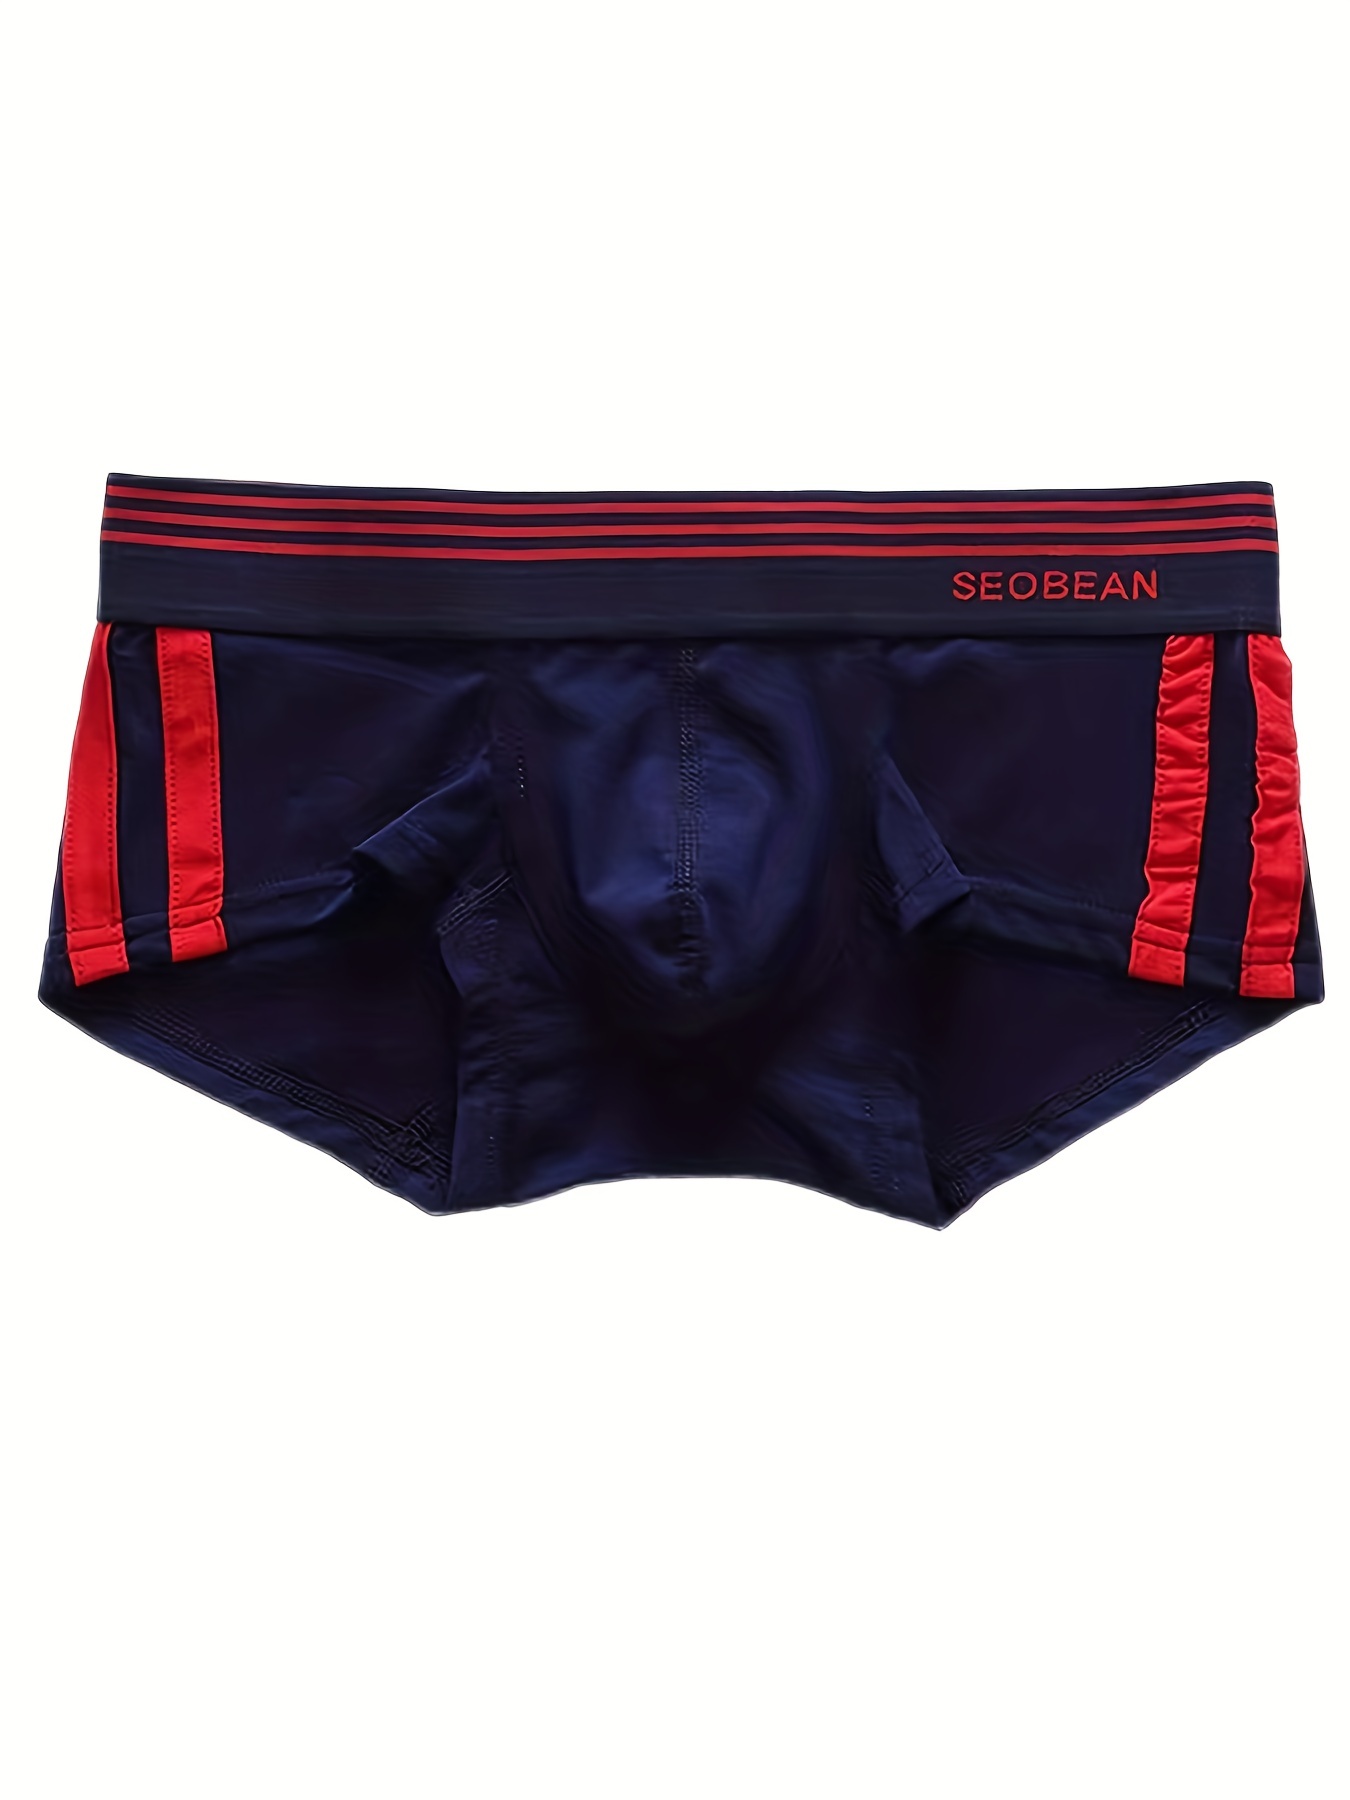 Men's Ball Hammock Pouch Underwear, Anti-Chafing, Italy